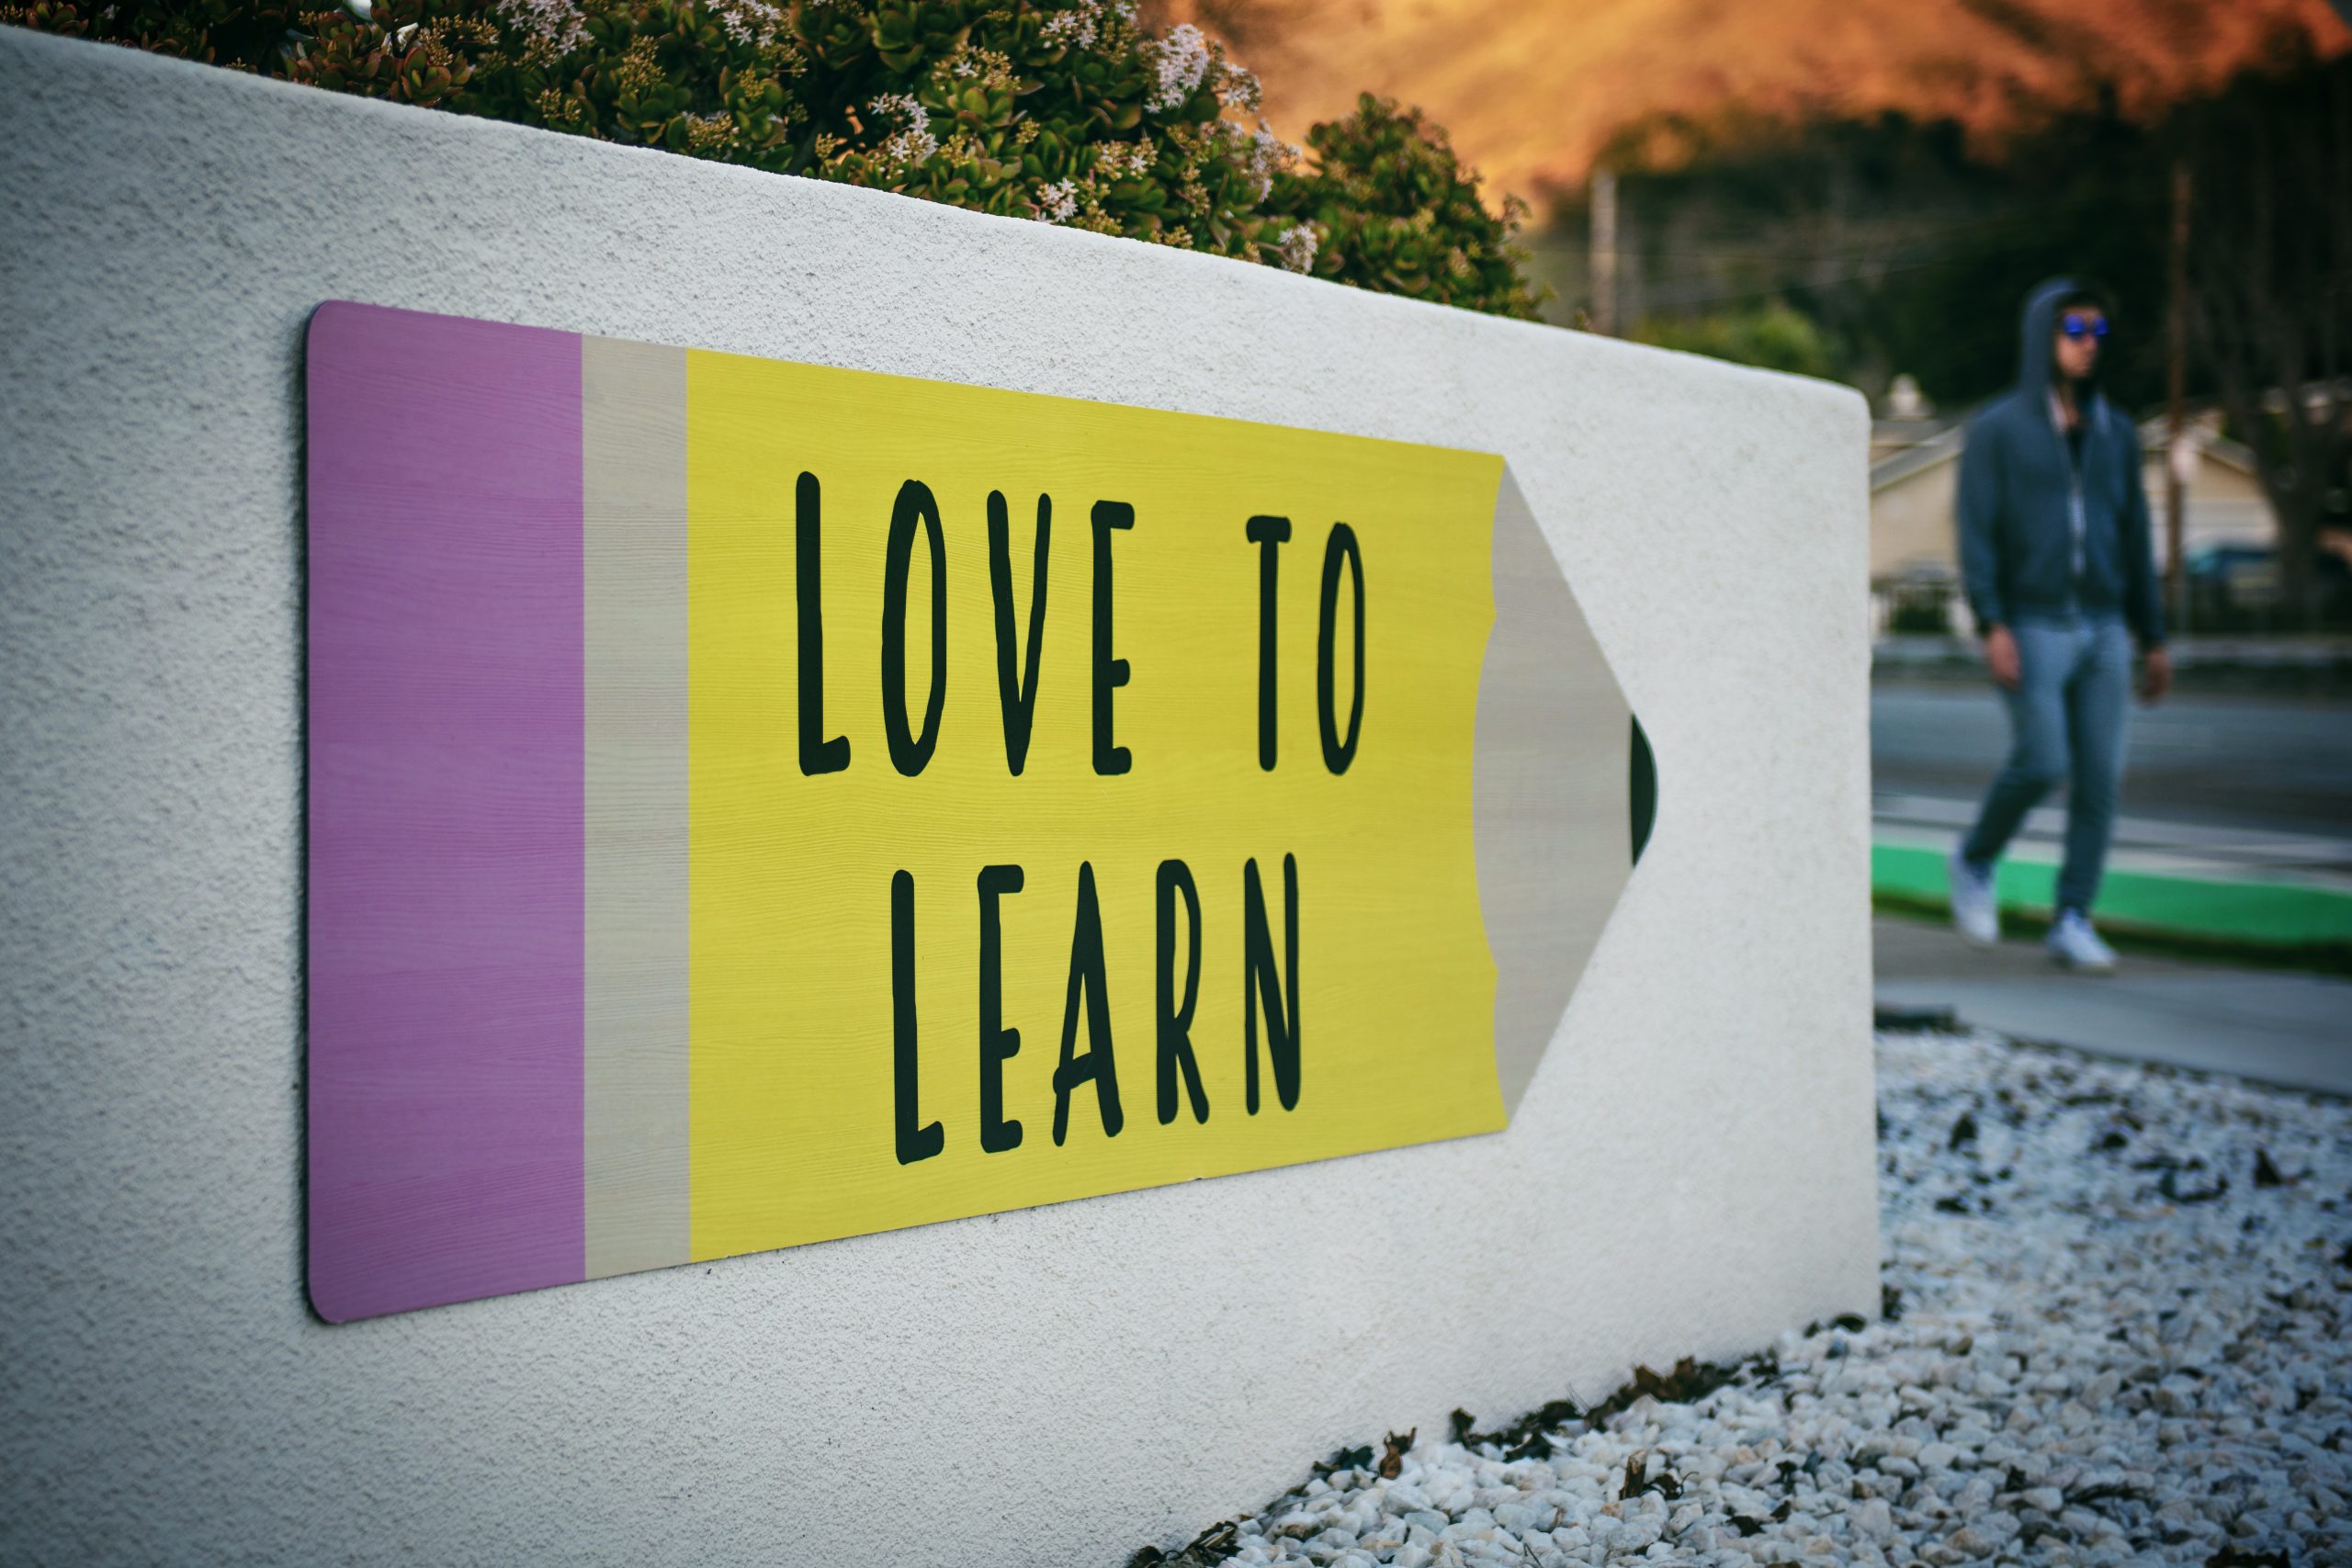 Love to learn (© Tim Mossholder, Unsplash)